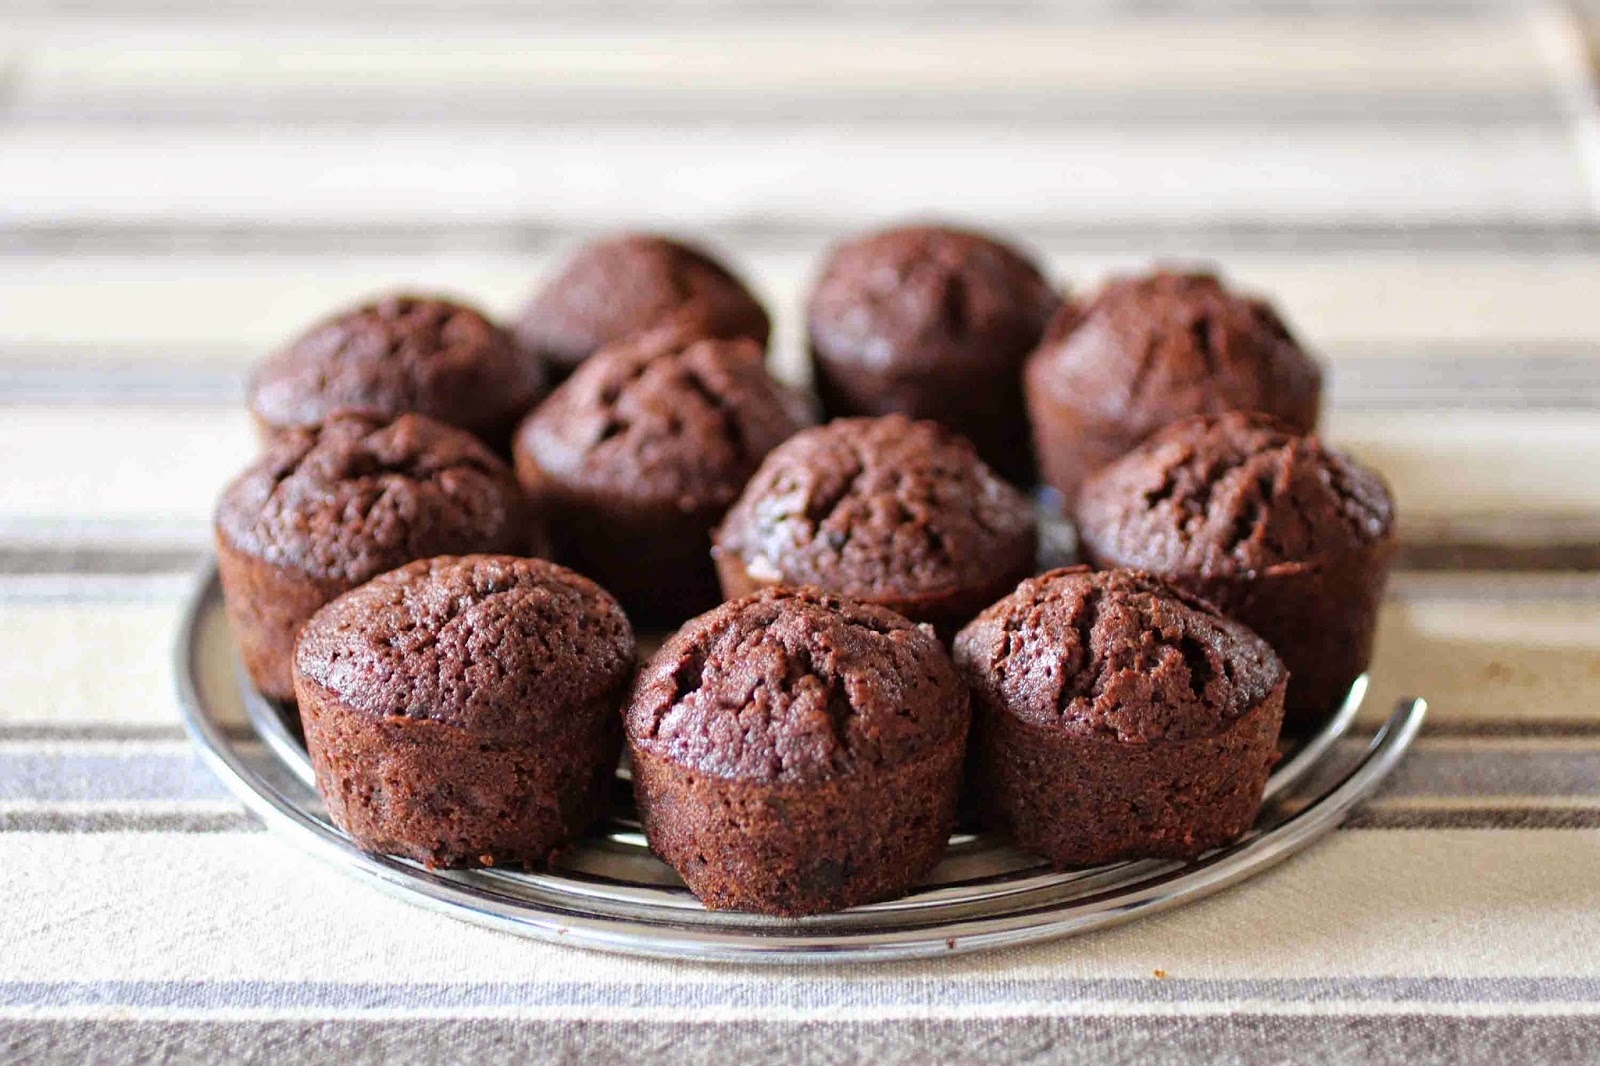 http://camilleenchocolat.blogspot.fr/2014/12/les-ptits-muffins-tout-chocolat.html